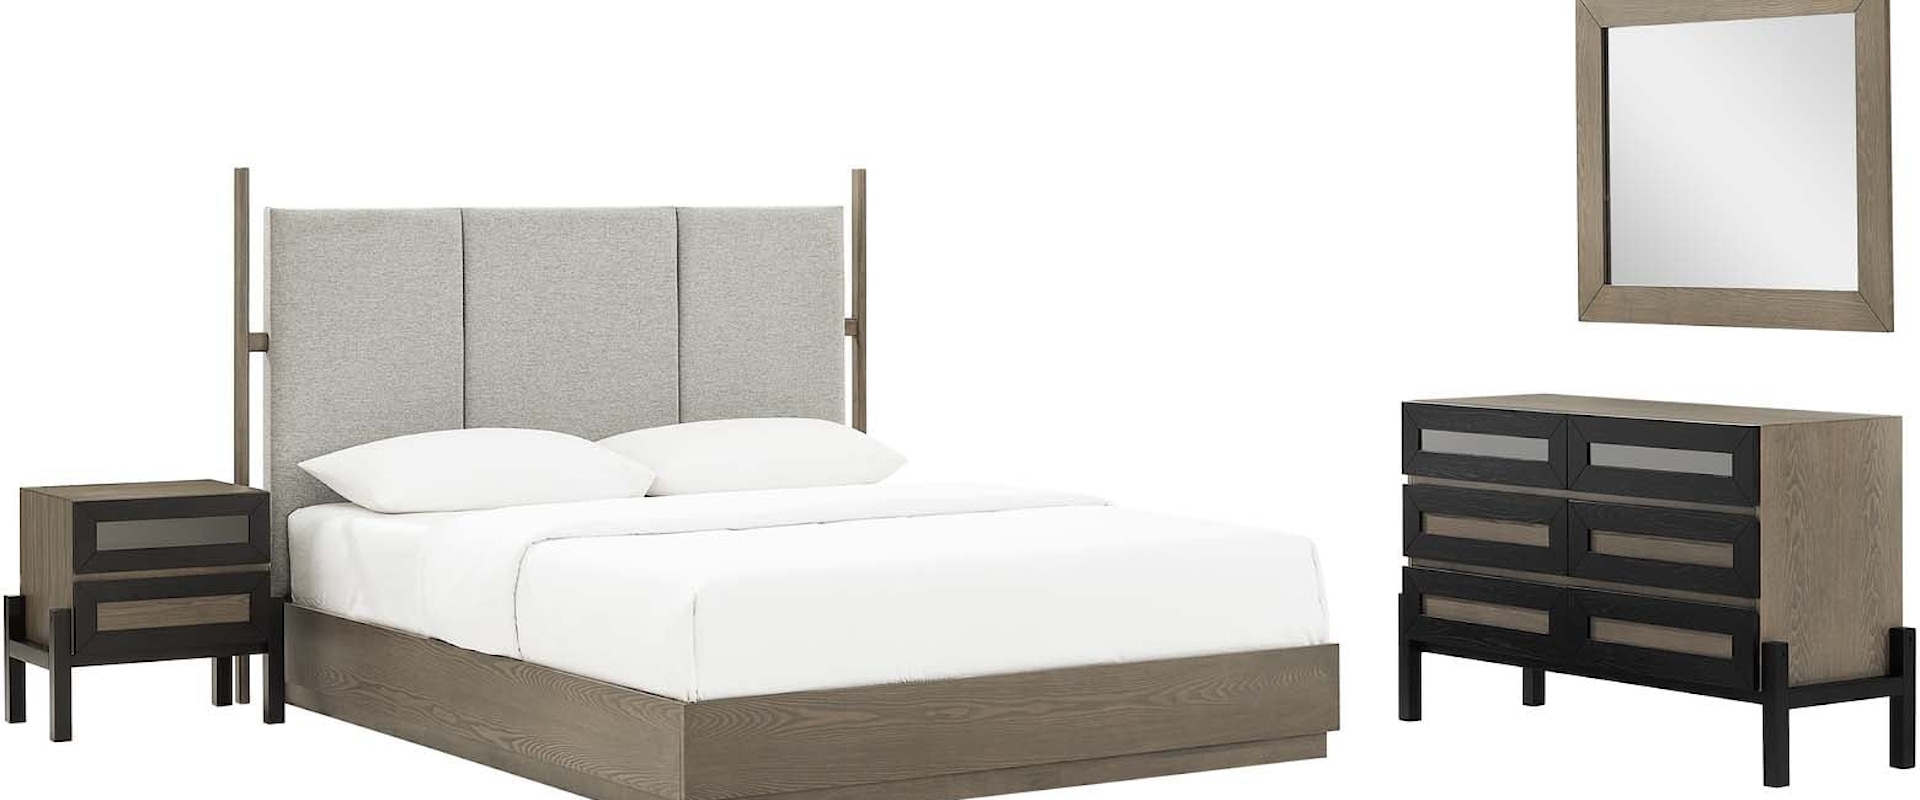 Merritt 4 Piece Upholstered Bedroom Set